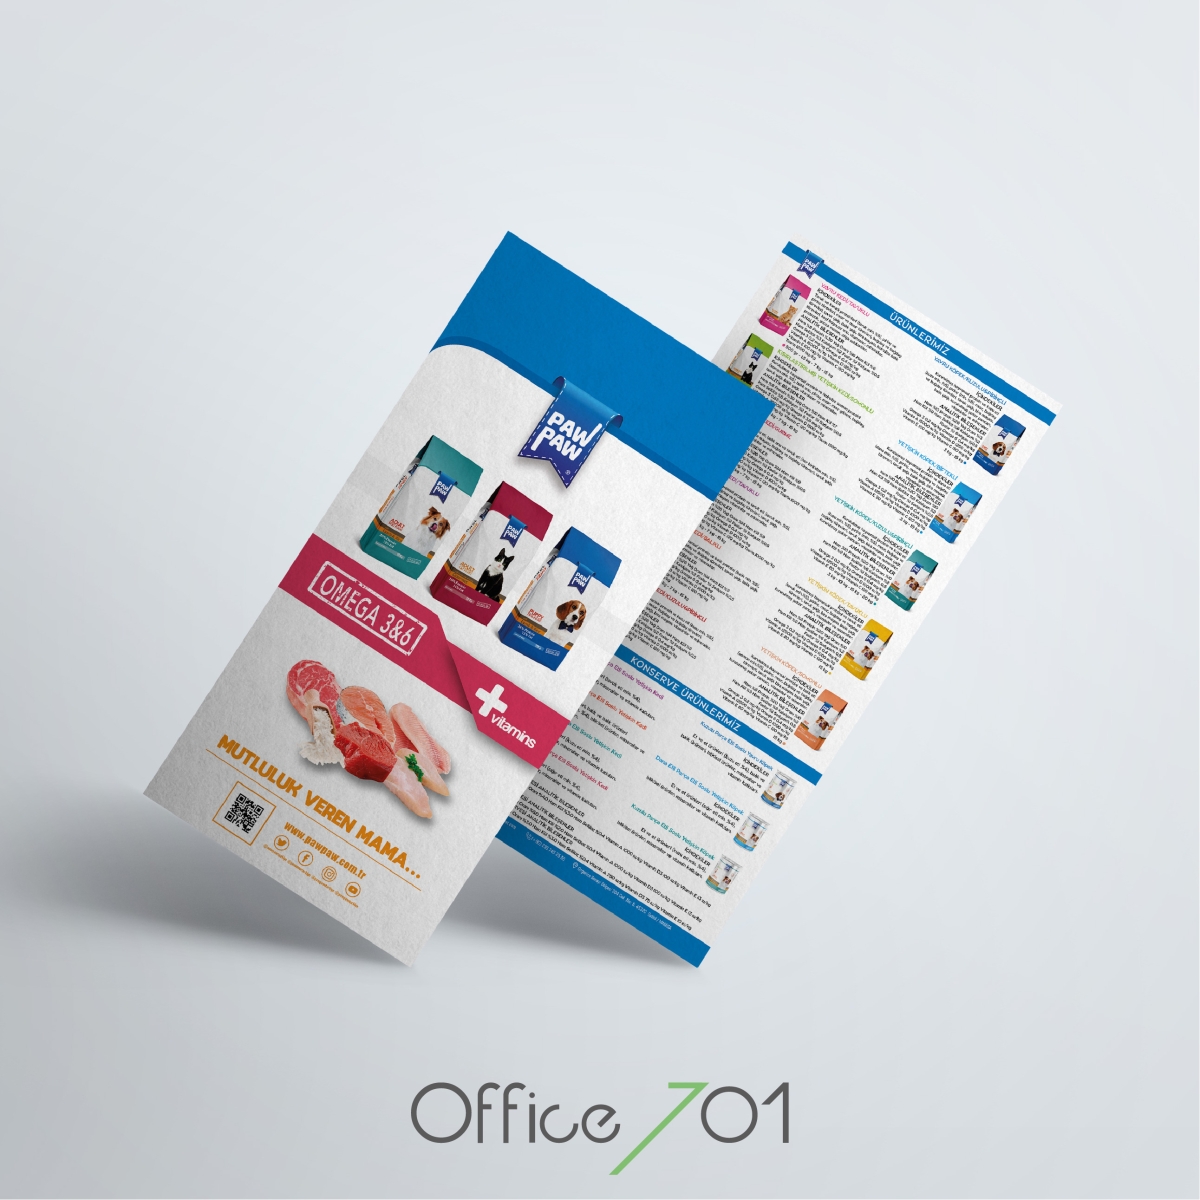 Office701 | Pawpaw Broşür Tasarımı